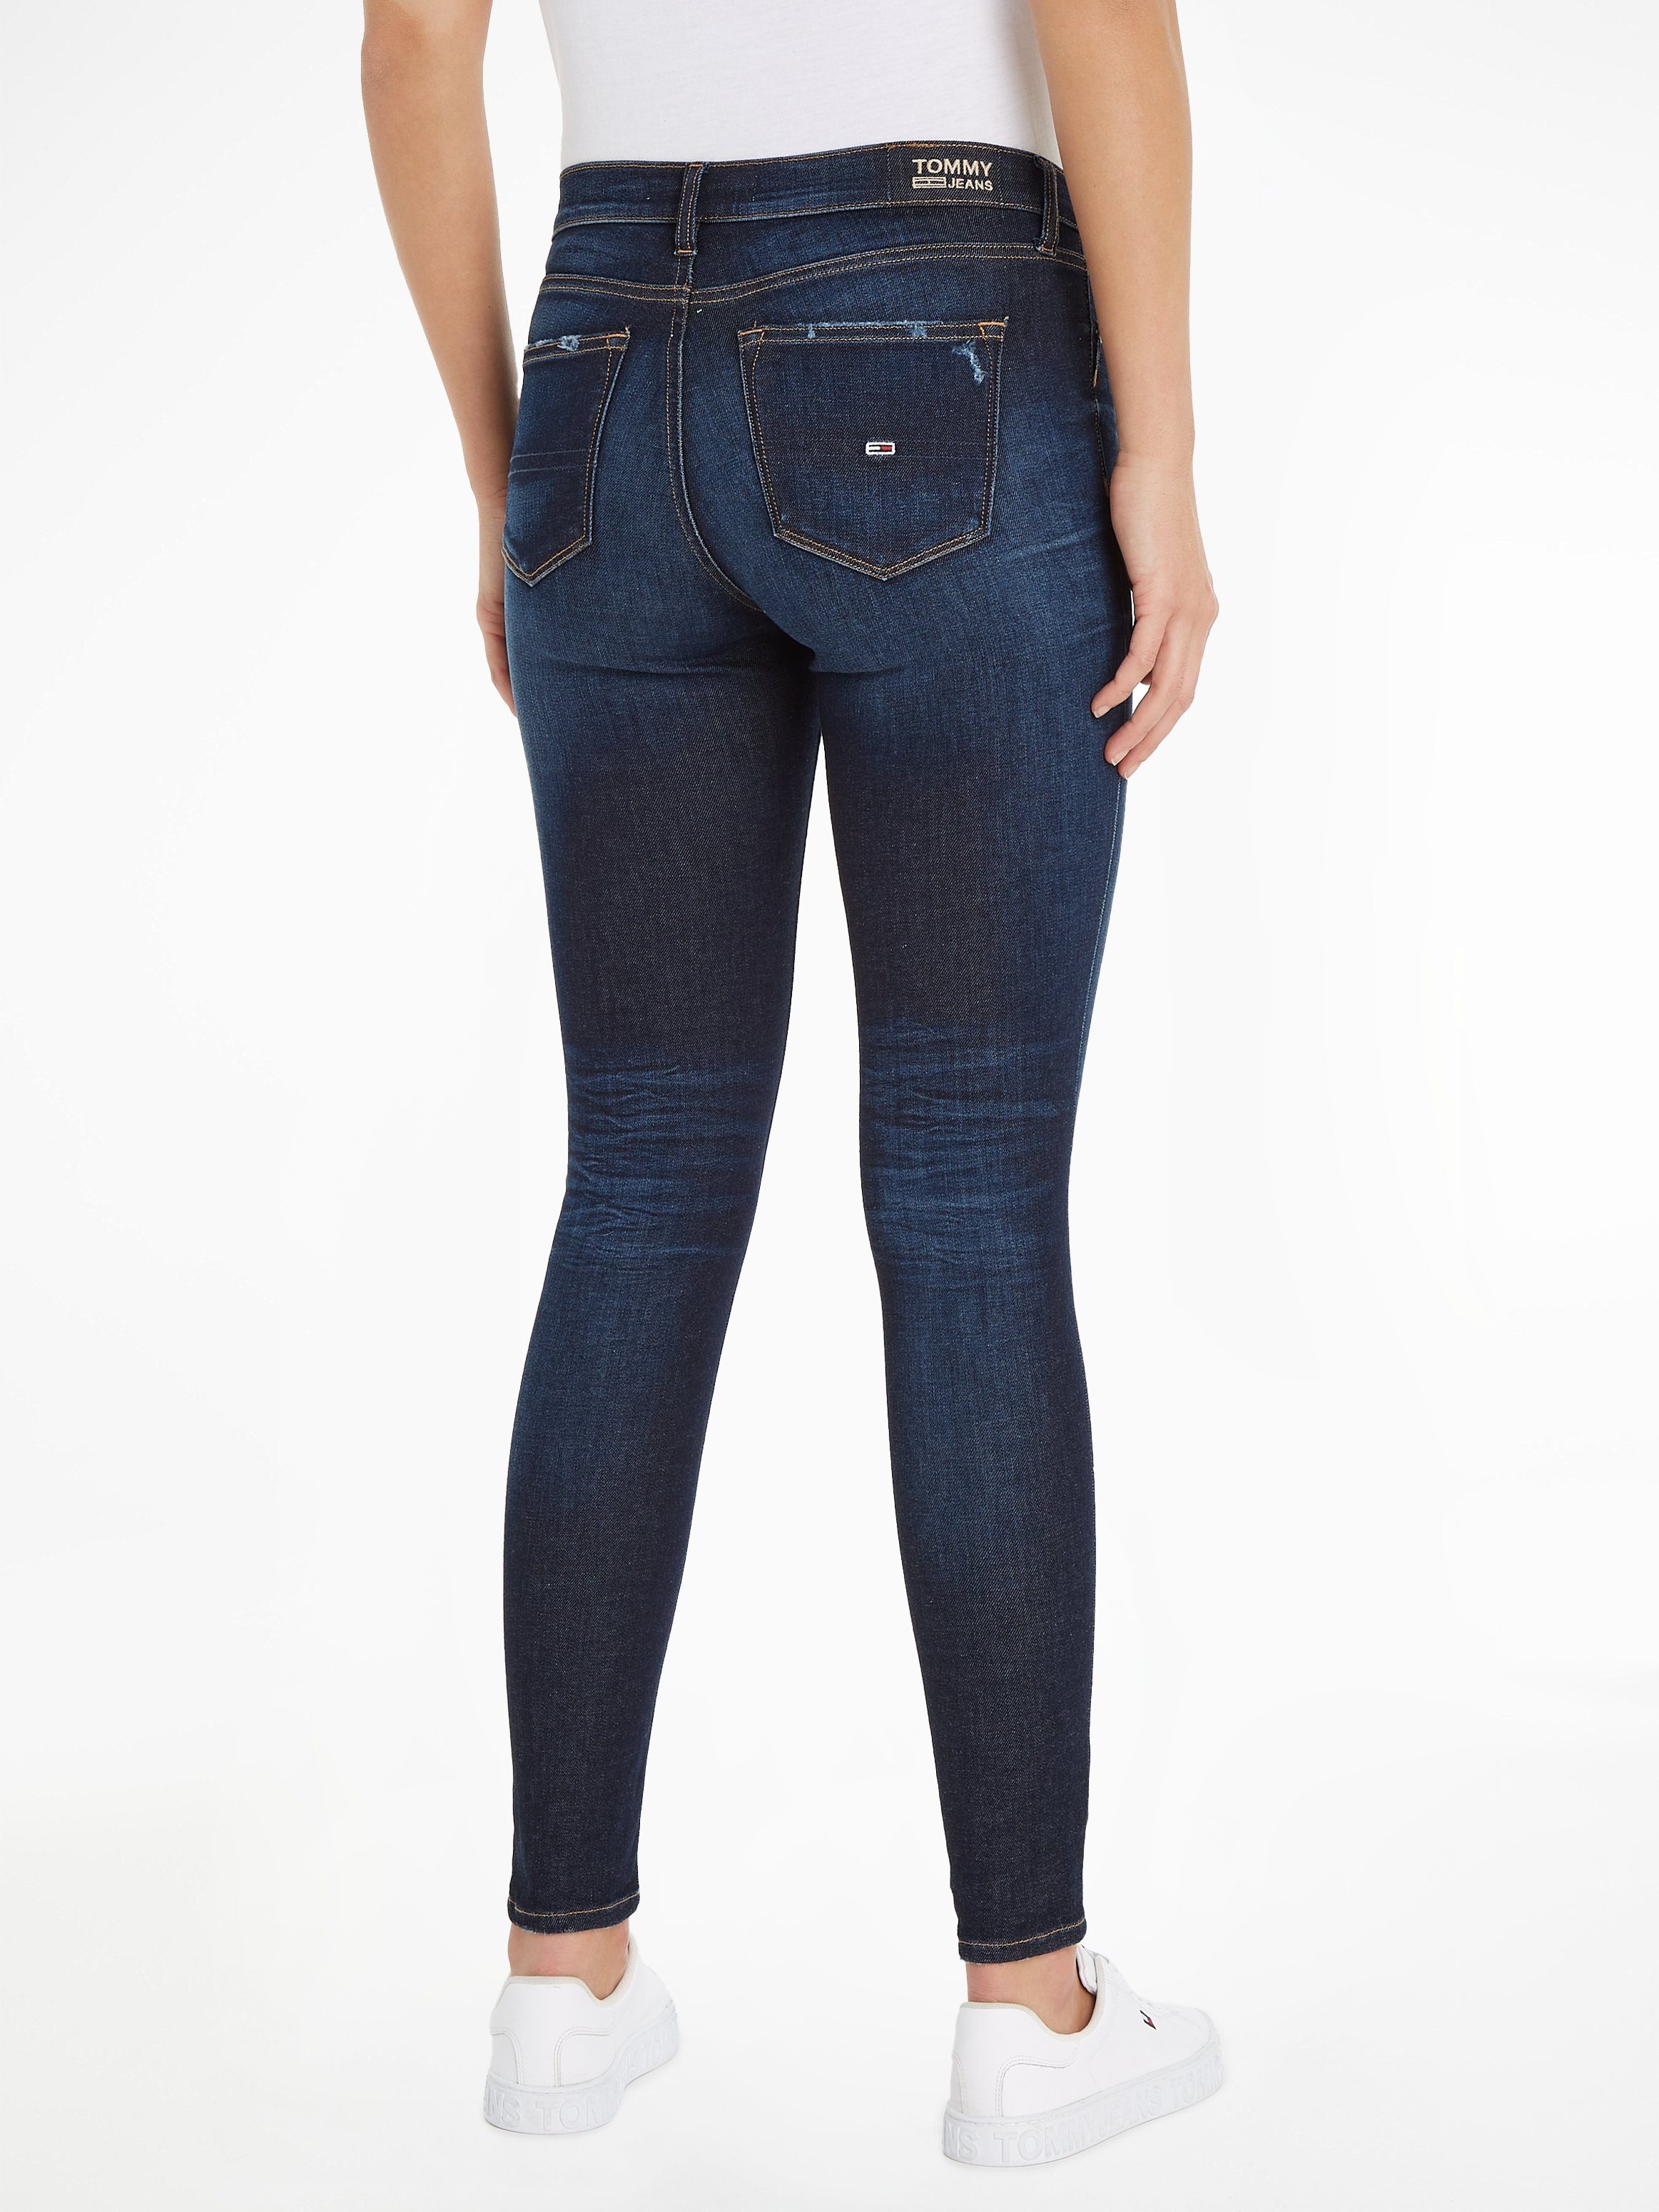 Tommy Jeans Skinny-fit-Jeans mit Tommy Denim_dark Markenlabel Jeans